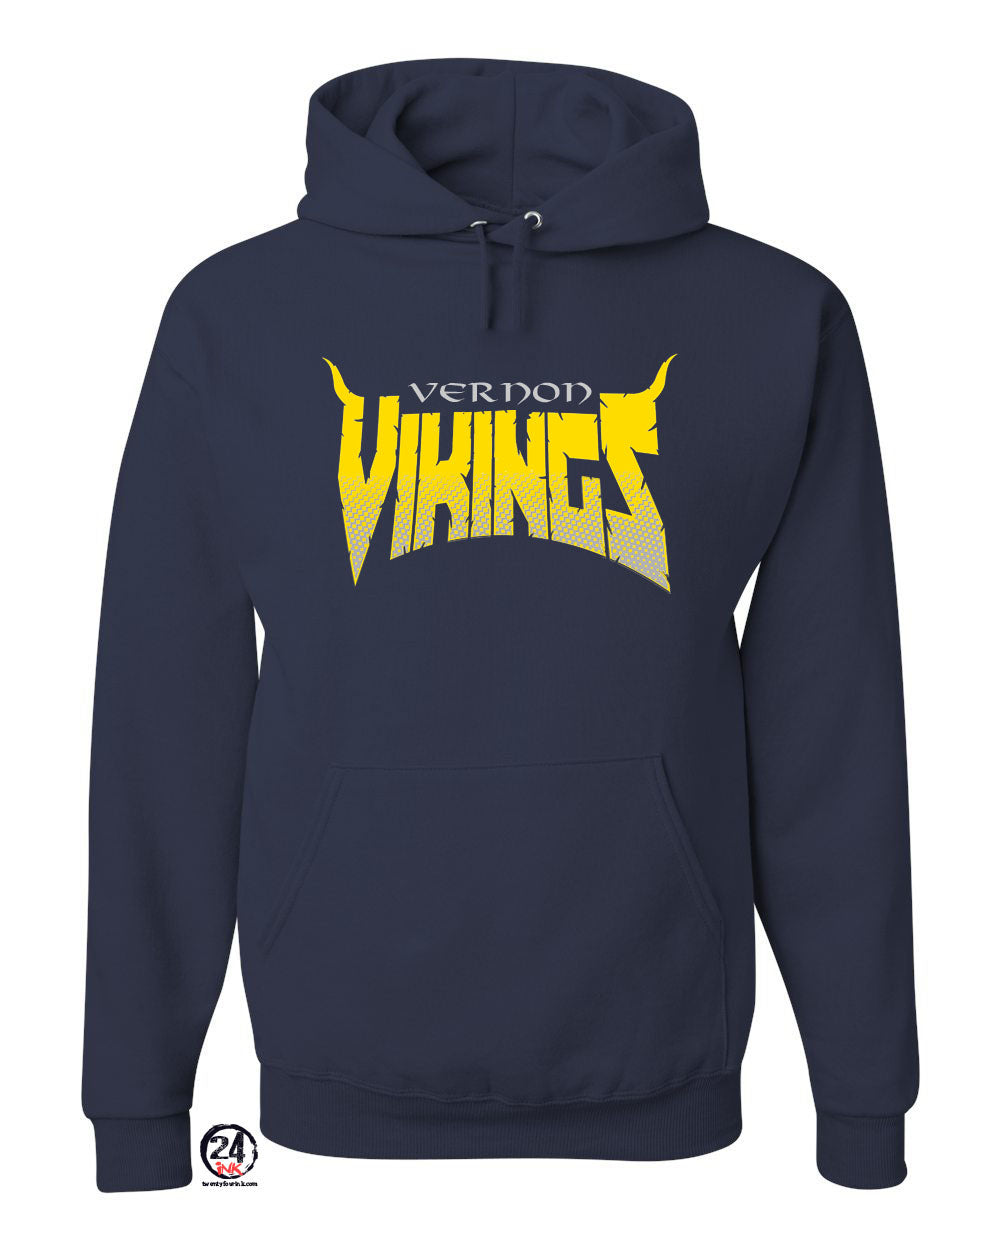 VTHS Design 15 Hooded Sweatshirt